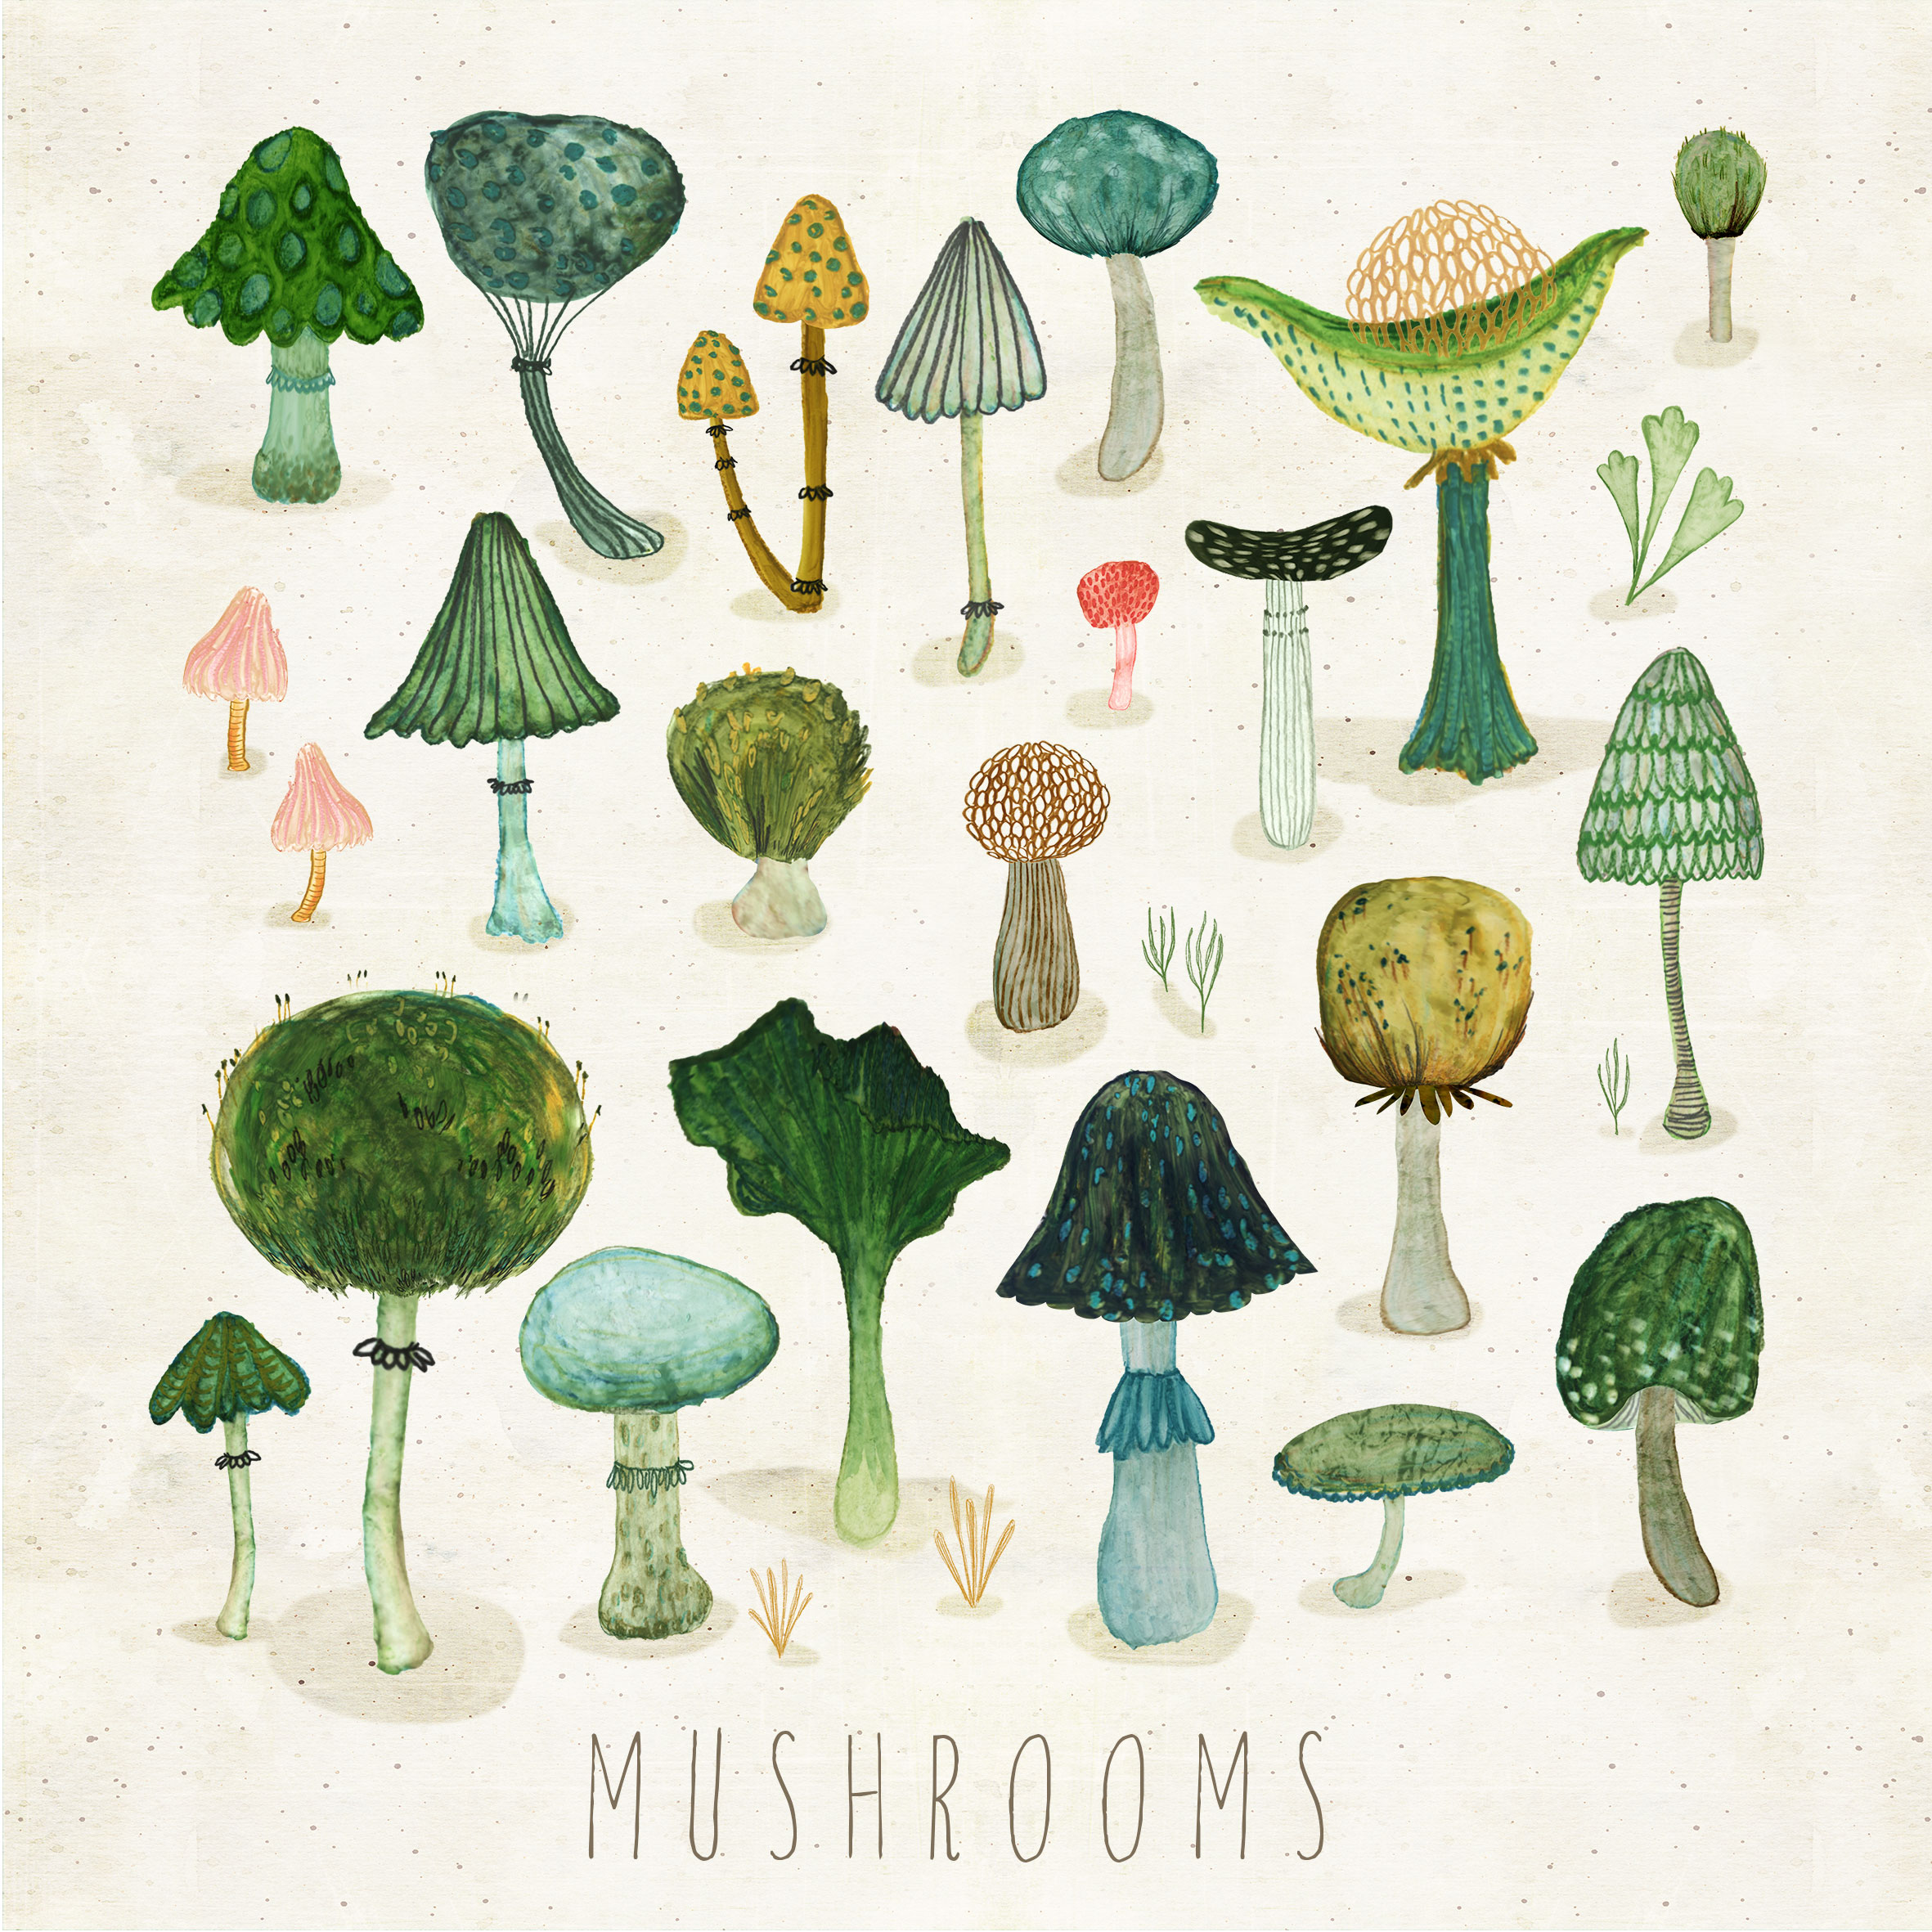 Above: © Mushrooms by Katherine Quinn courtesy of Jehane Ltd.